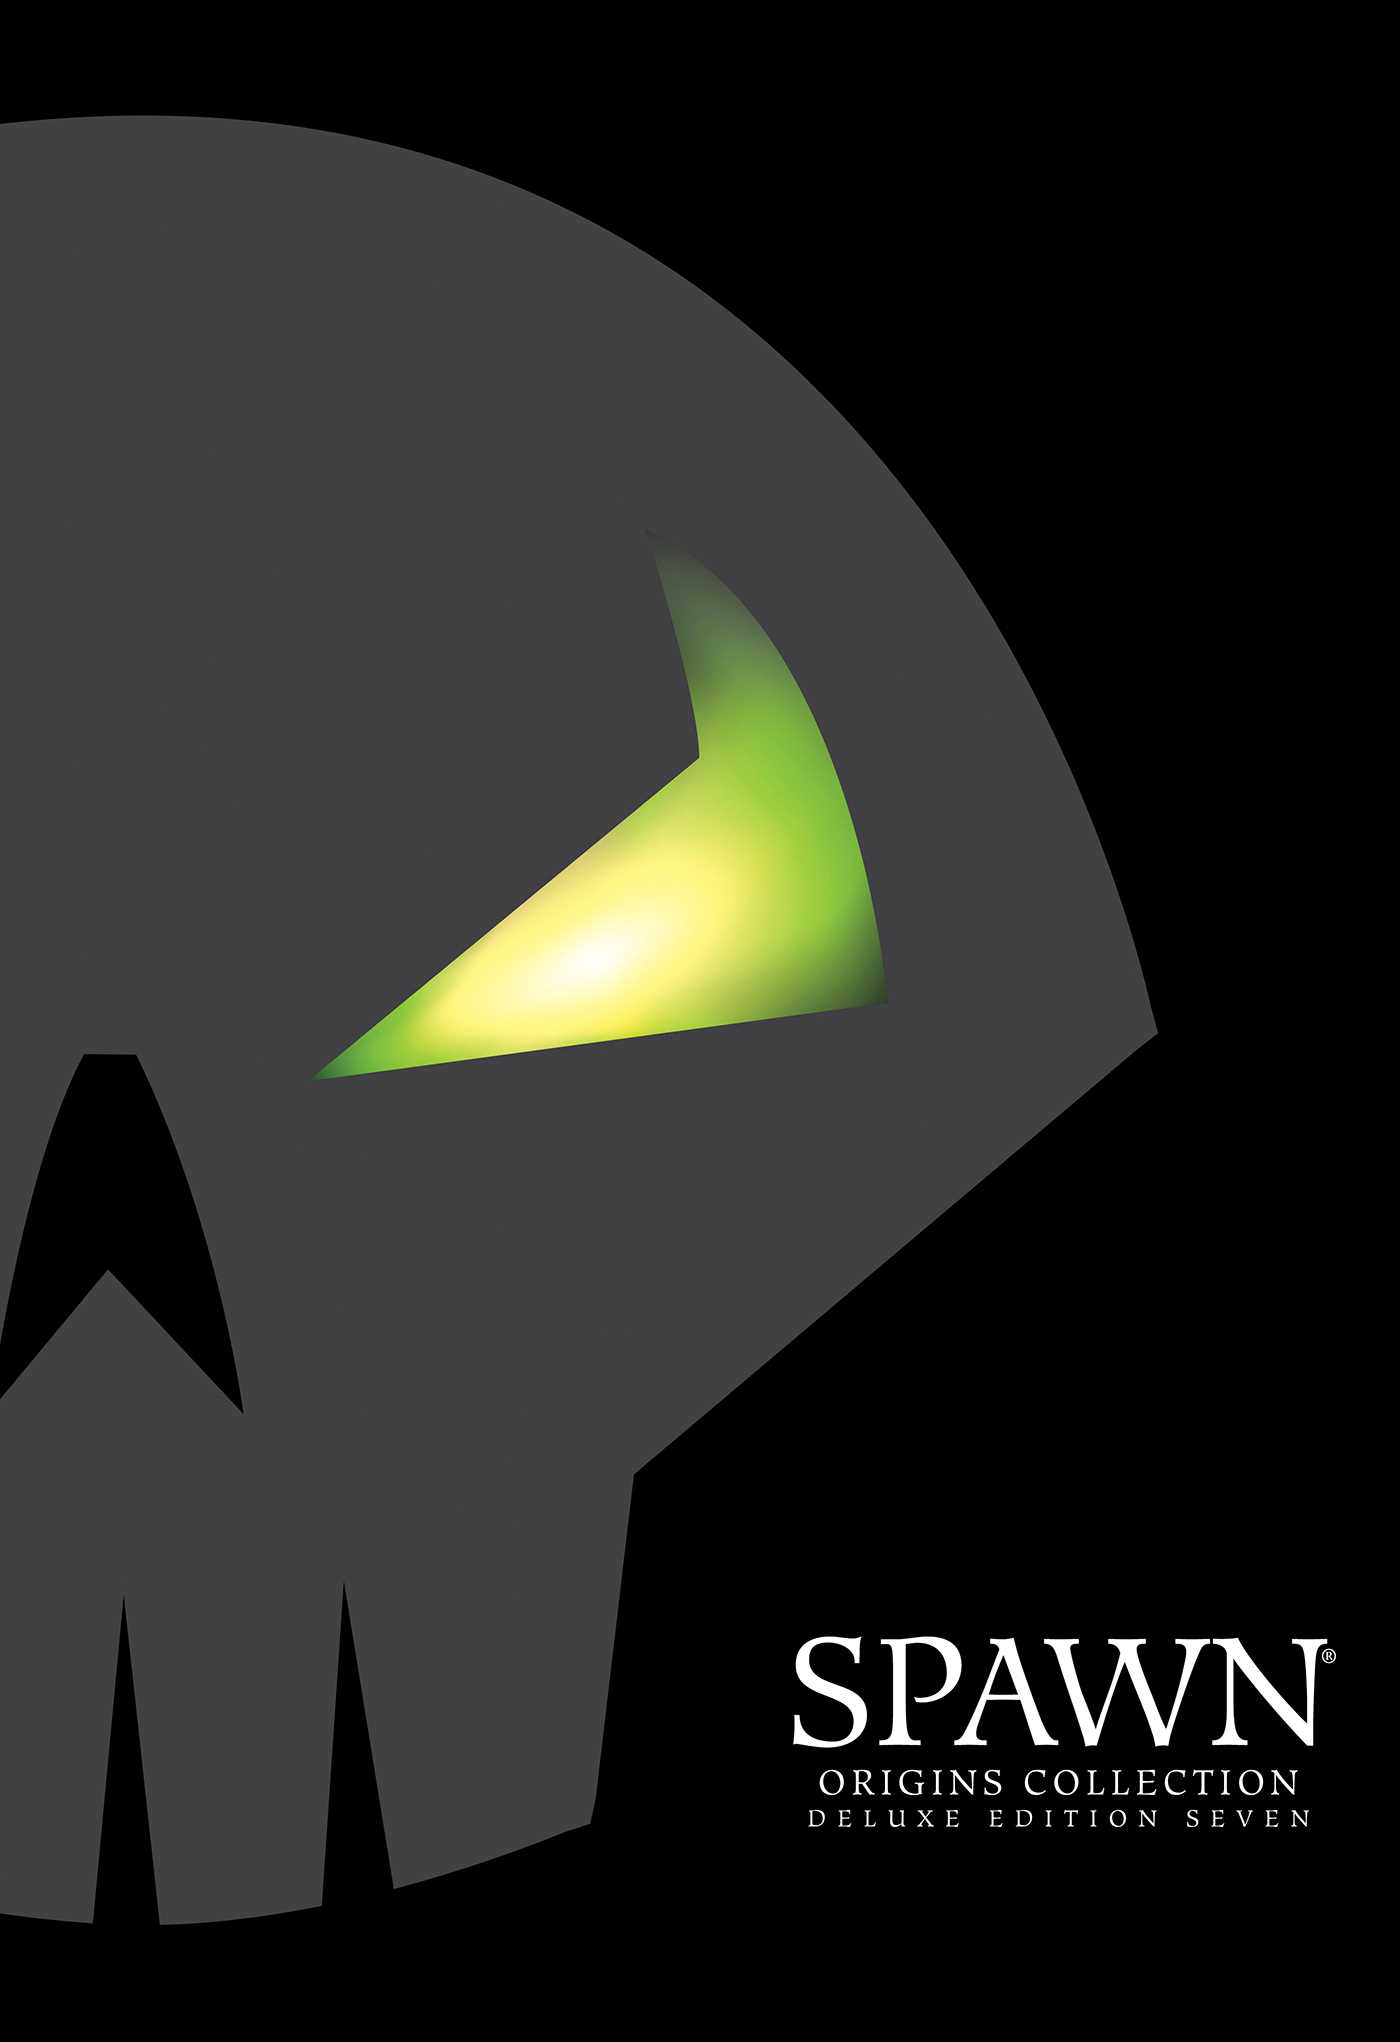 Spawn Origins Deluxe Edition Hardcover Volume 7